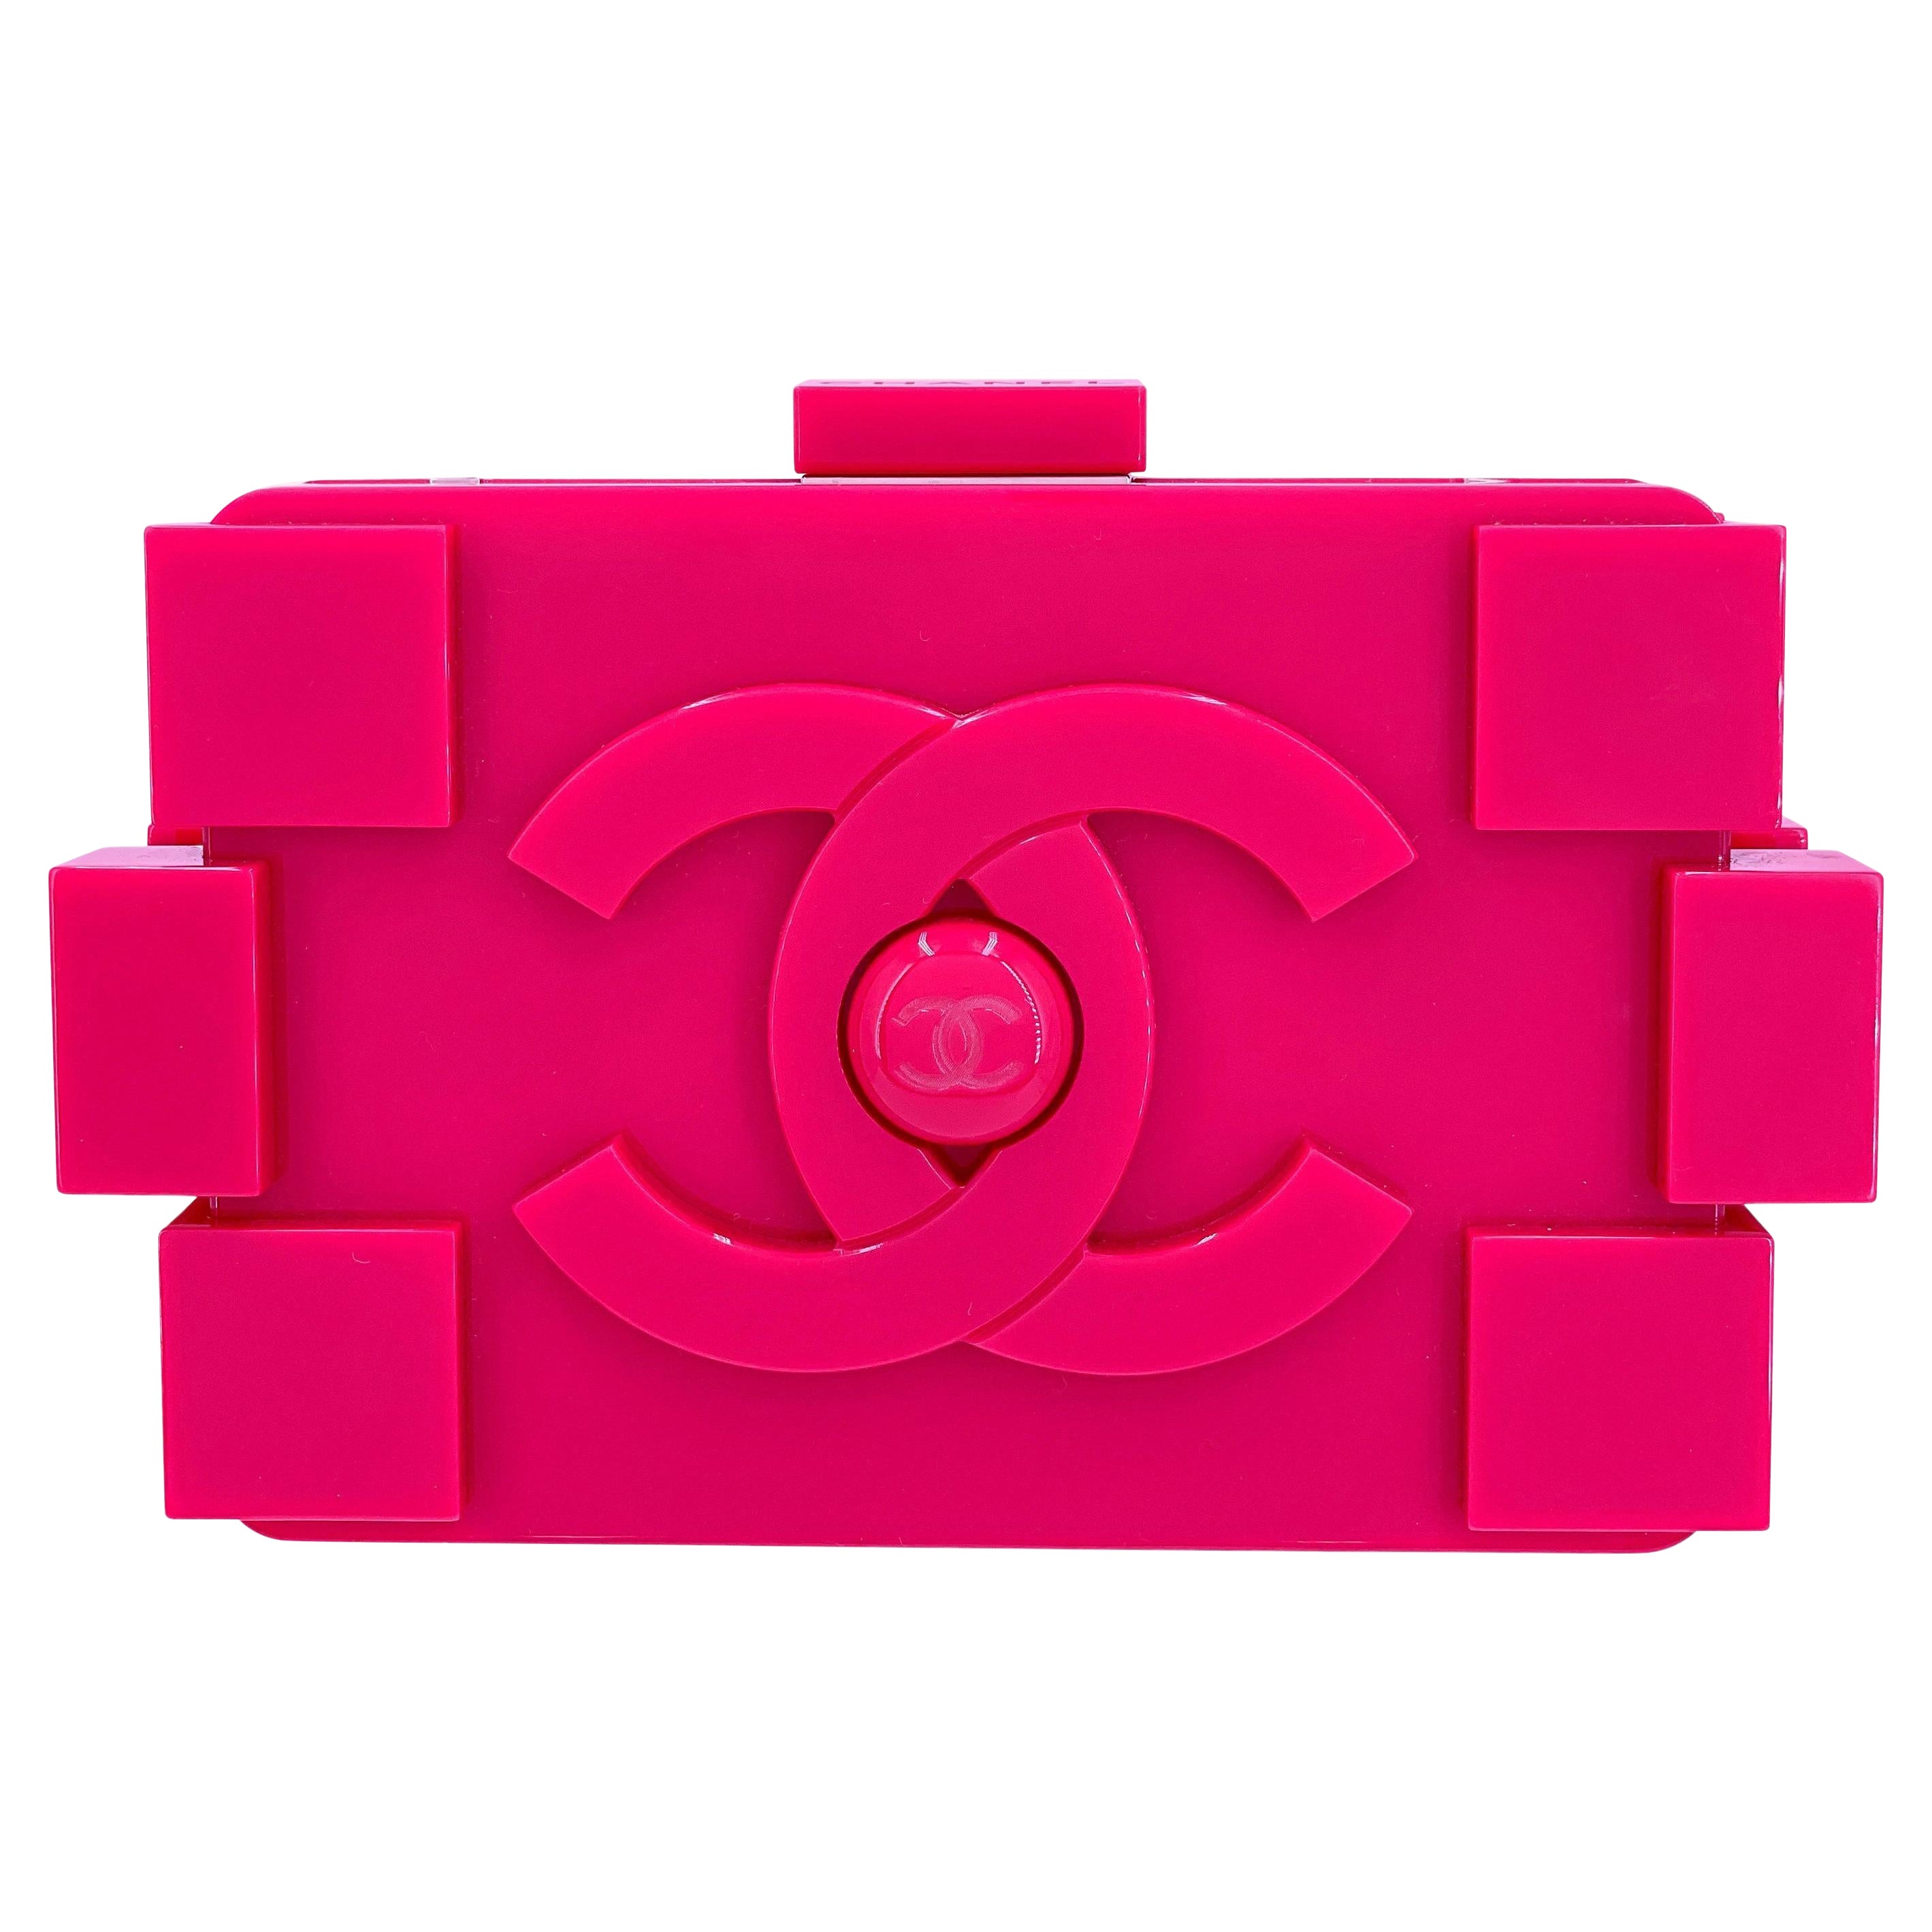 Chanel 2014 Pink Lego Brick Minaudière Plexiglass Clutch Shoulder Bag RHW 67522 For Sale